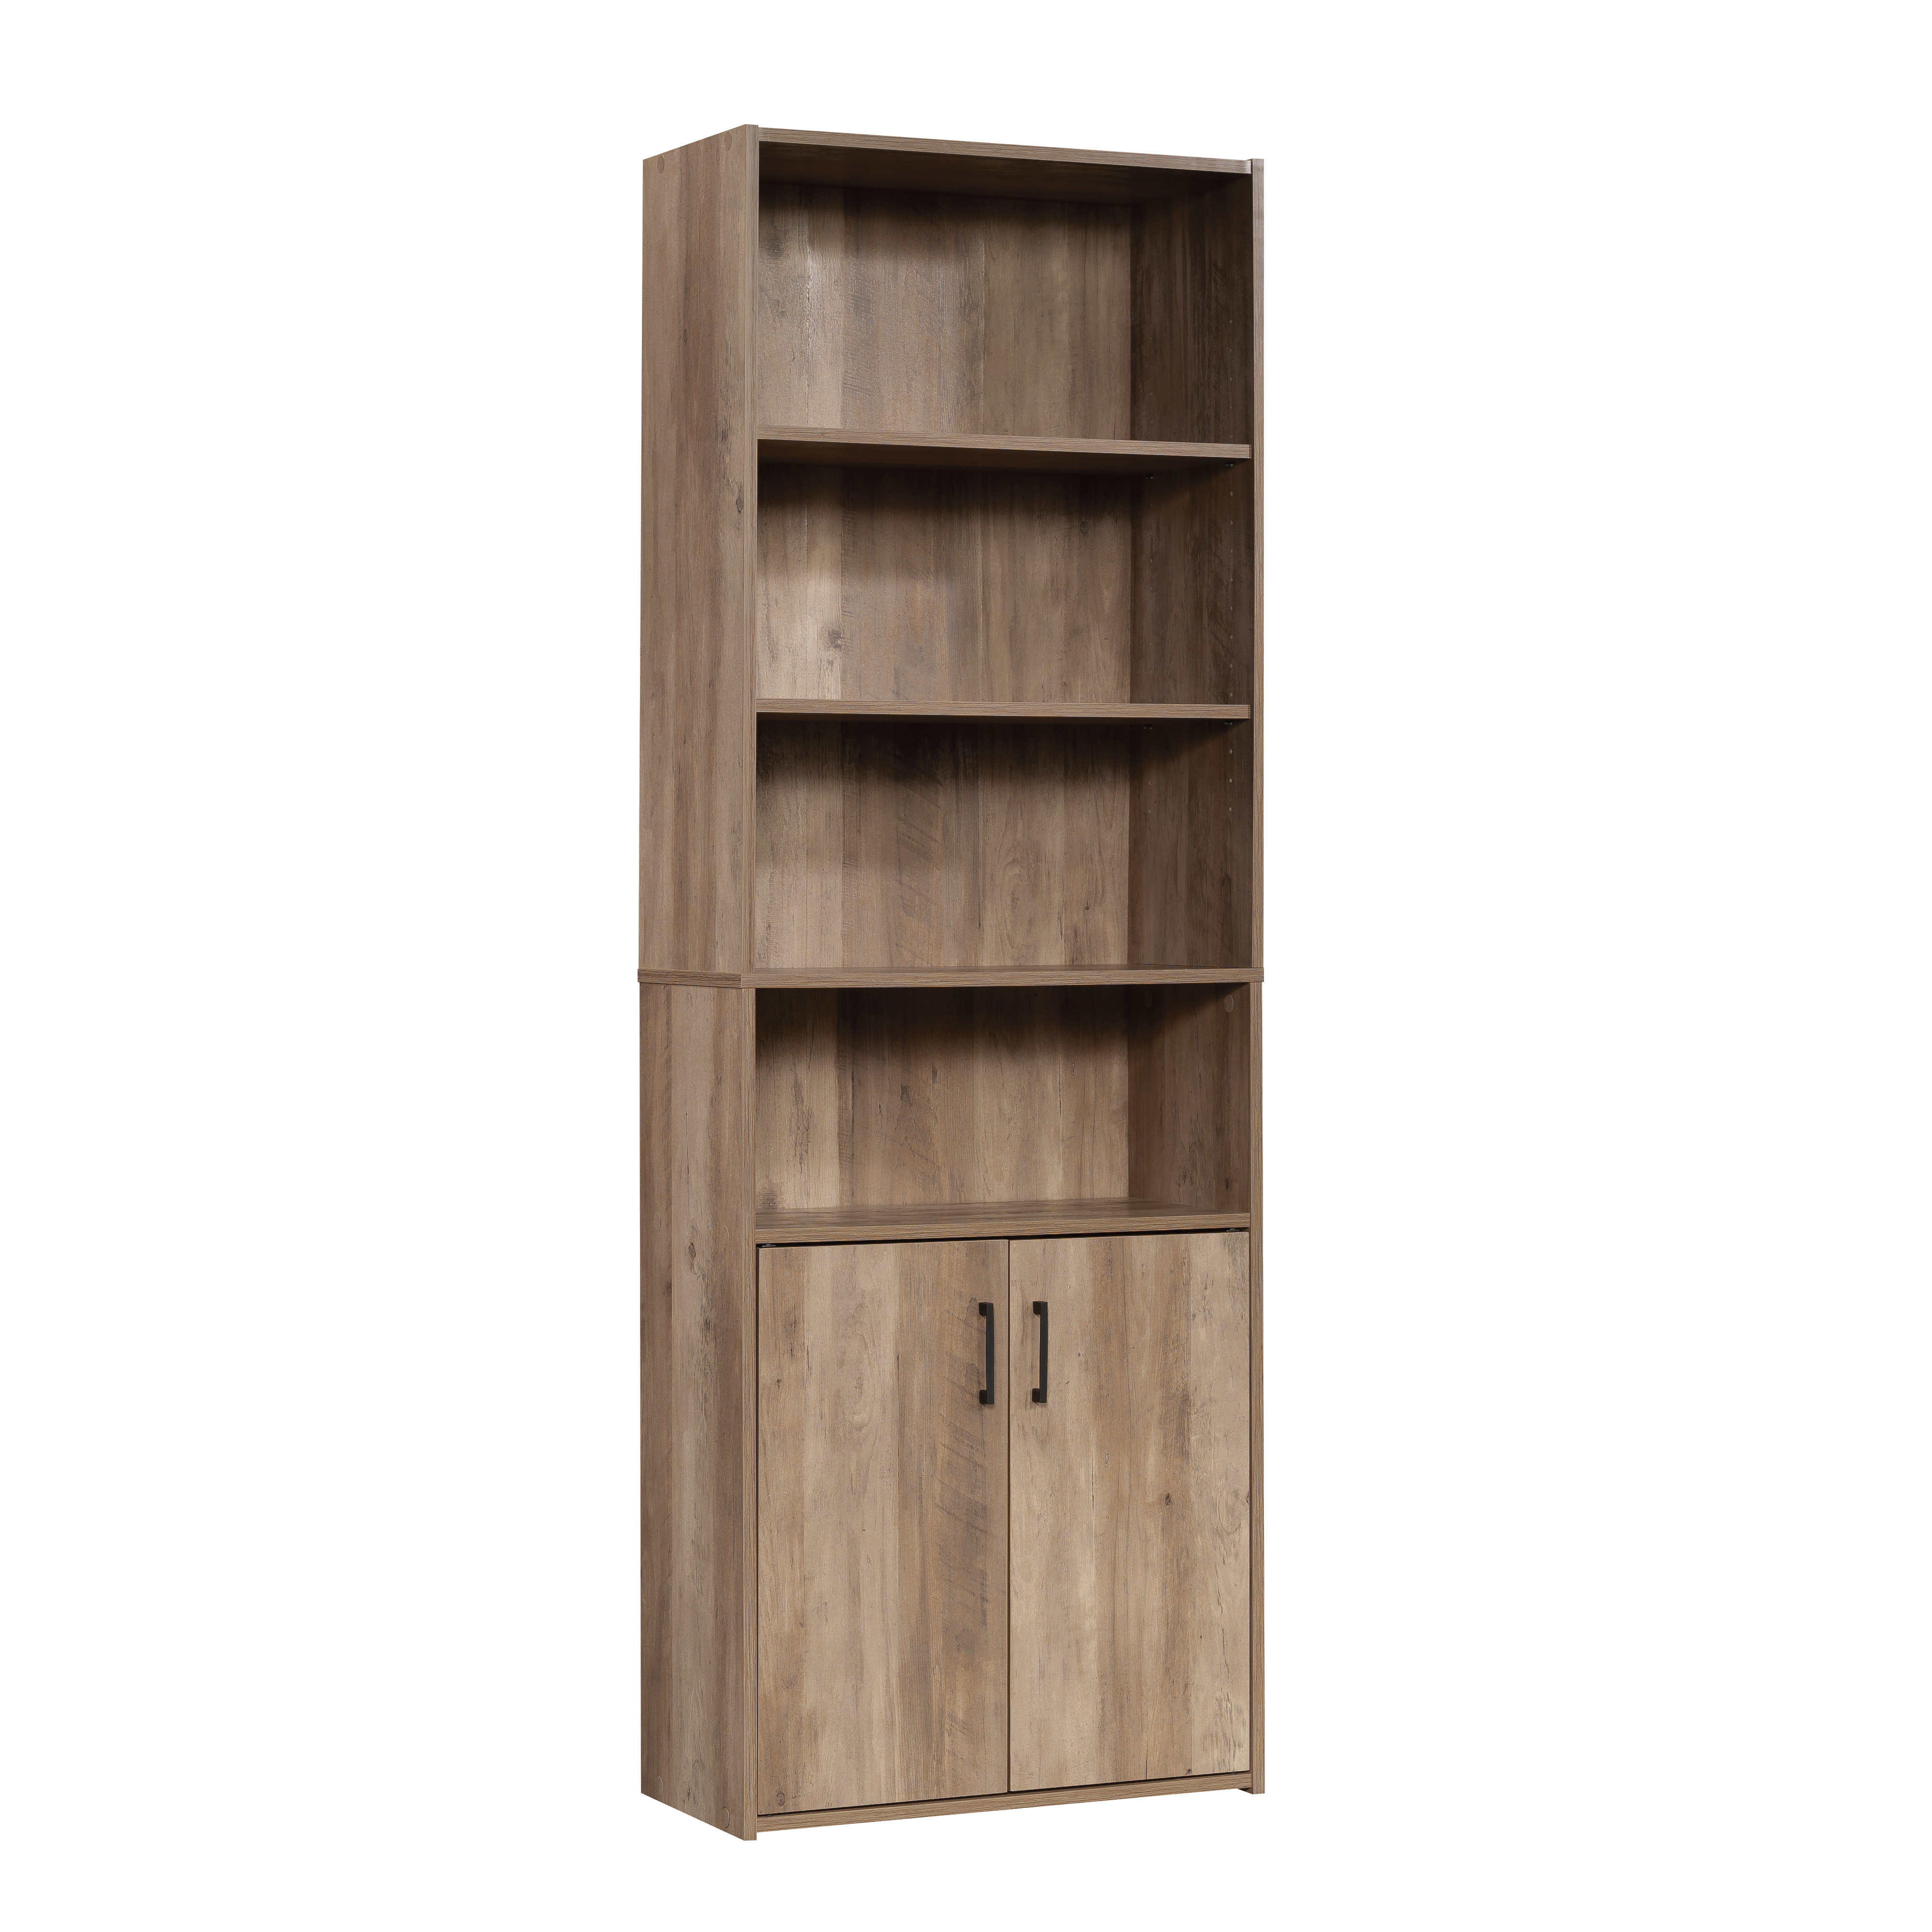 Mainstays Traditional 5 Shelf Bookcase with Doors, Weathered Oak Finish - image 5 of 10